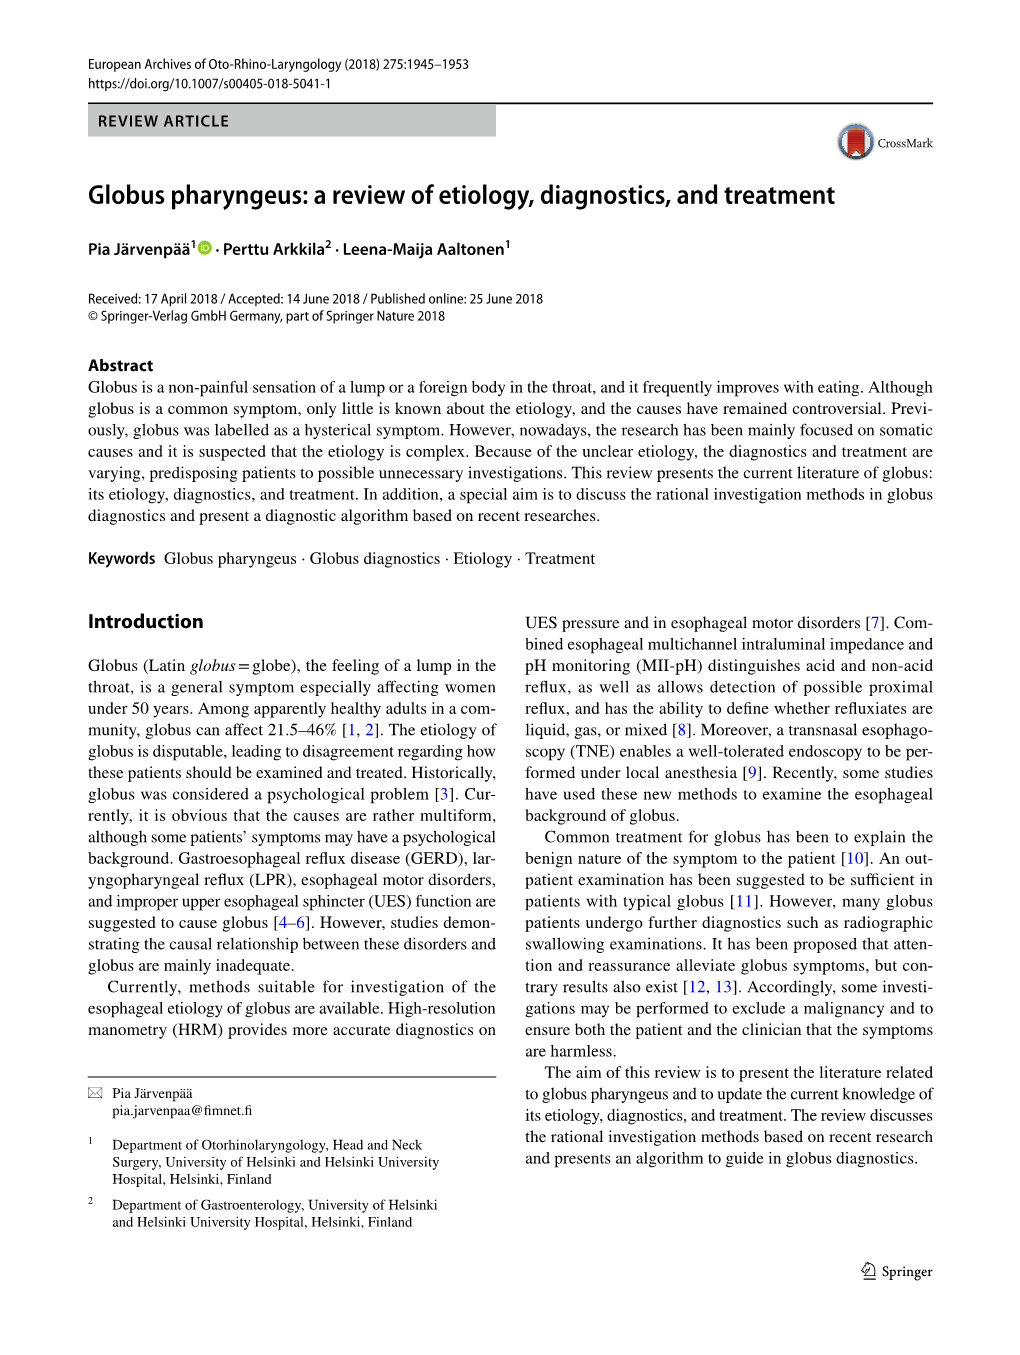 Globus Pharyngeus: a Review of Etiology, Diagnostics, and Treatment